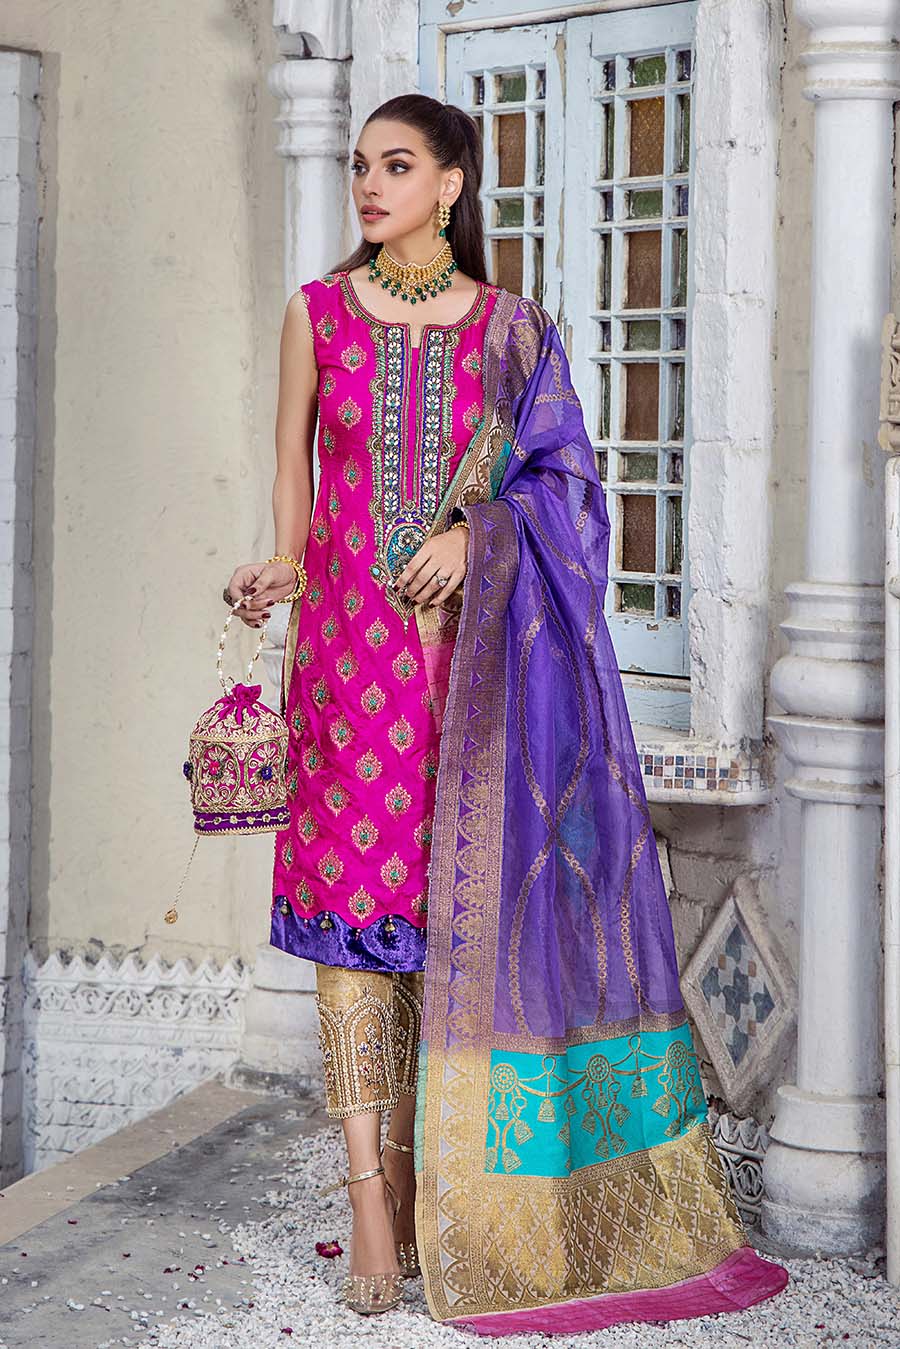 KHUDA BAKSH Formal Wear Pakistani Dress | RP-248-18